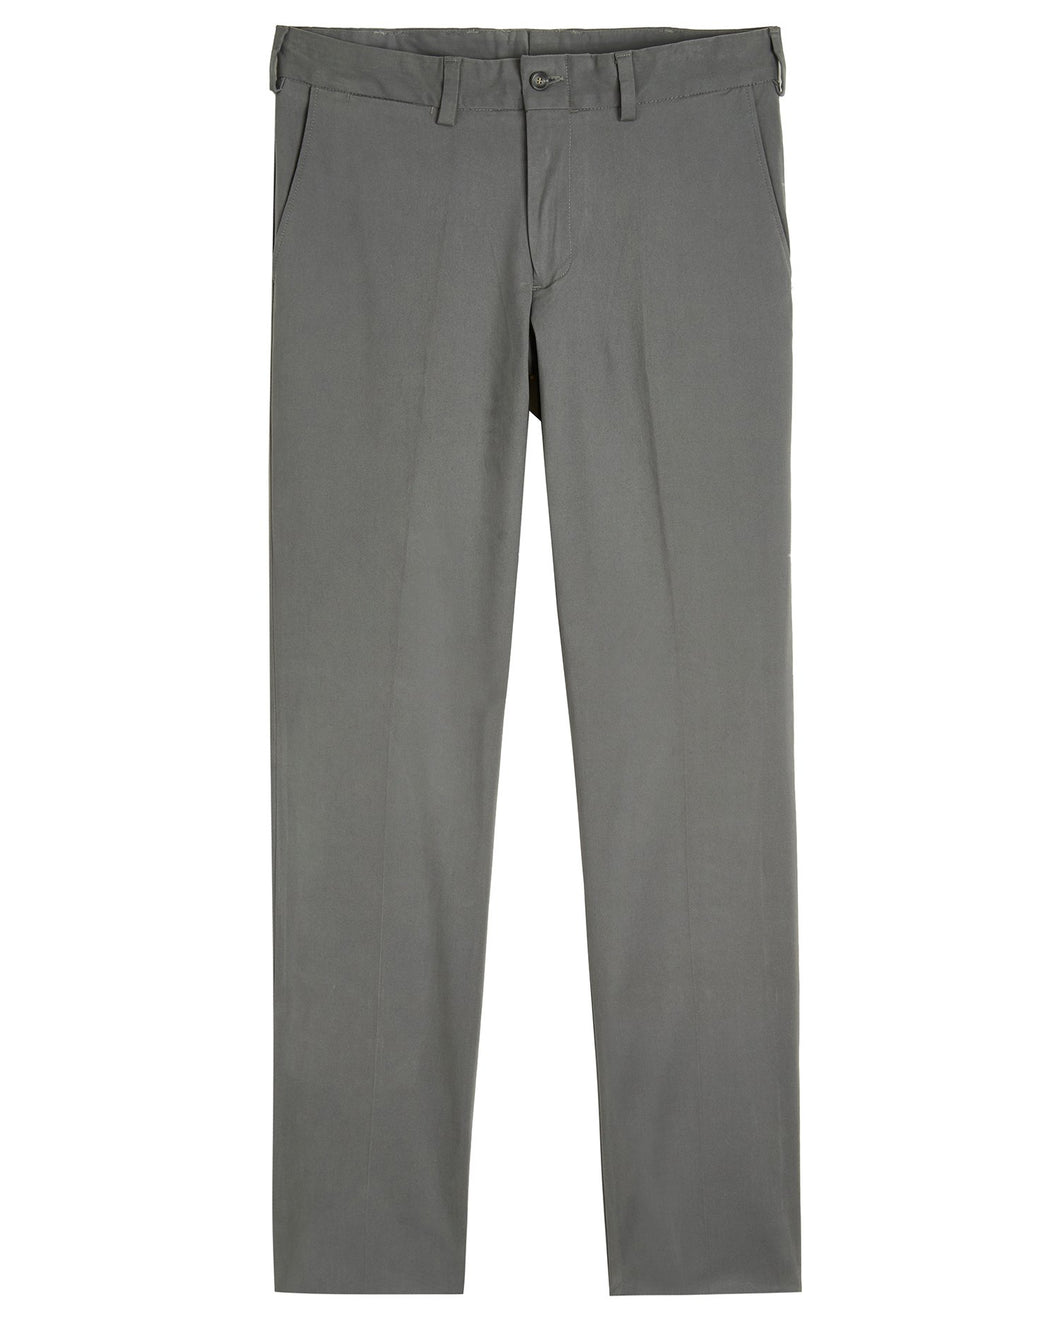 Bills Khakis Straight Fit Smart Khaki Pant | Gray